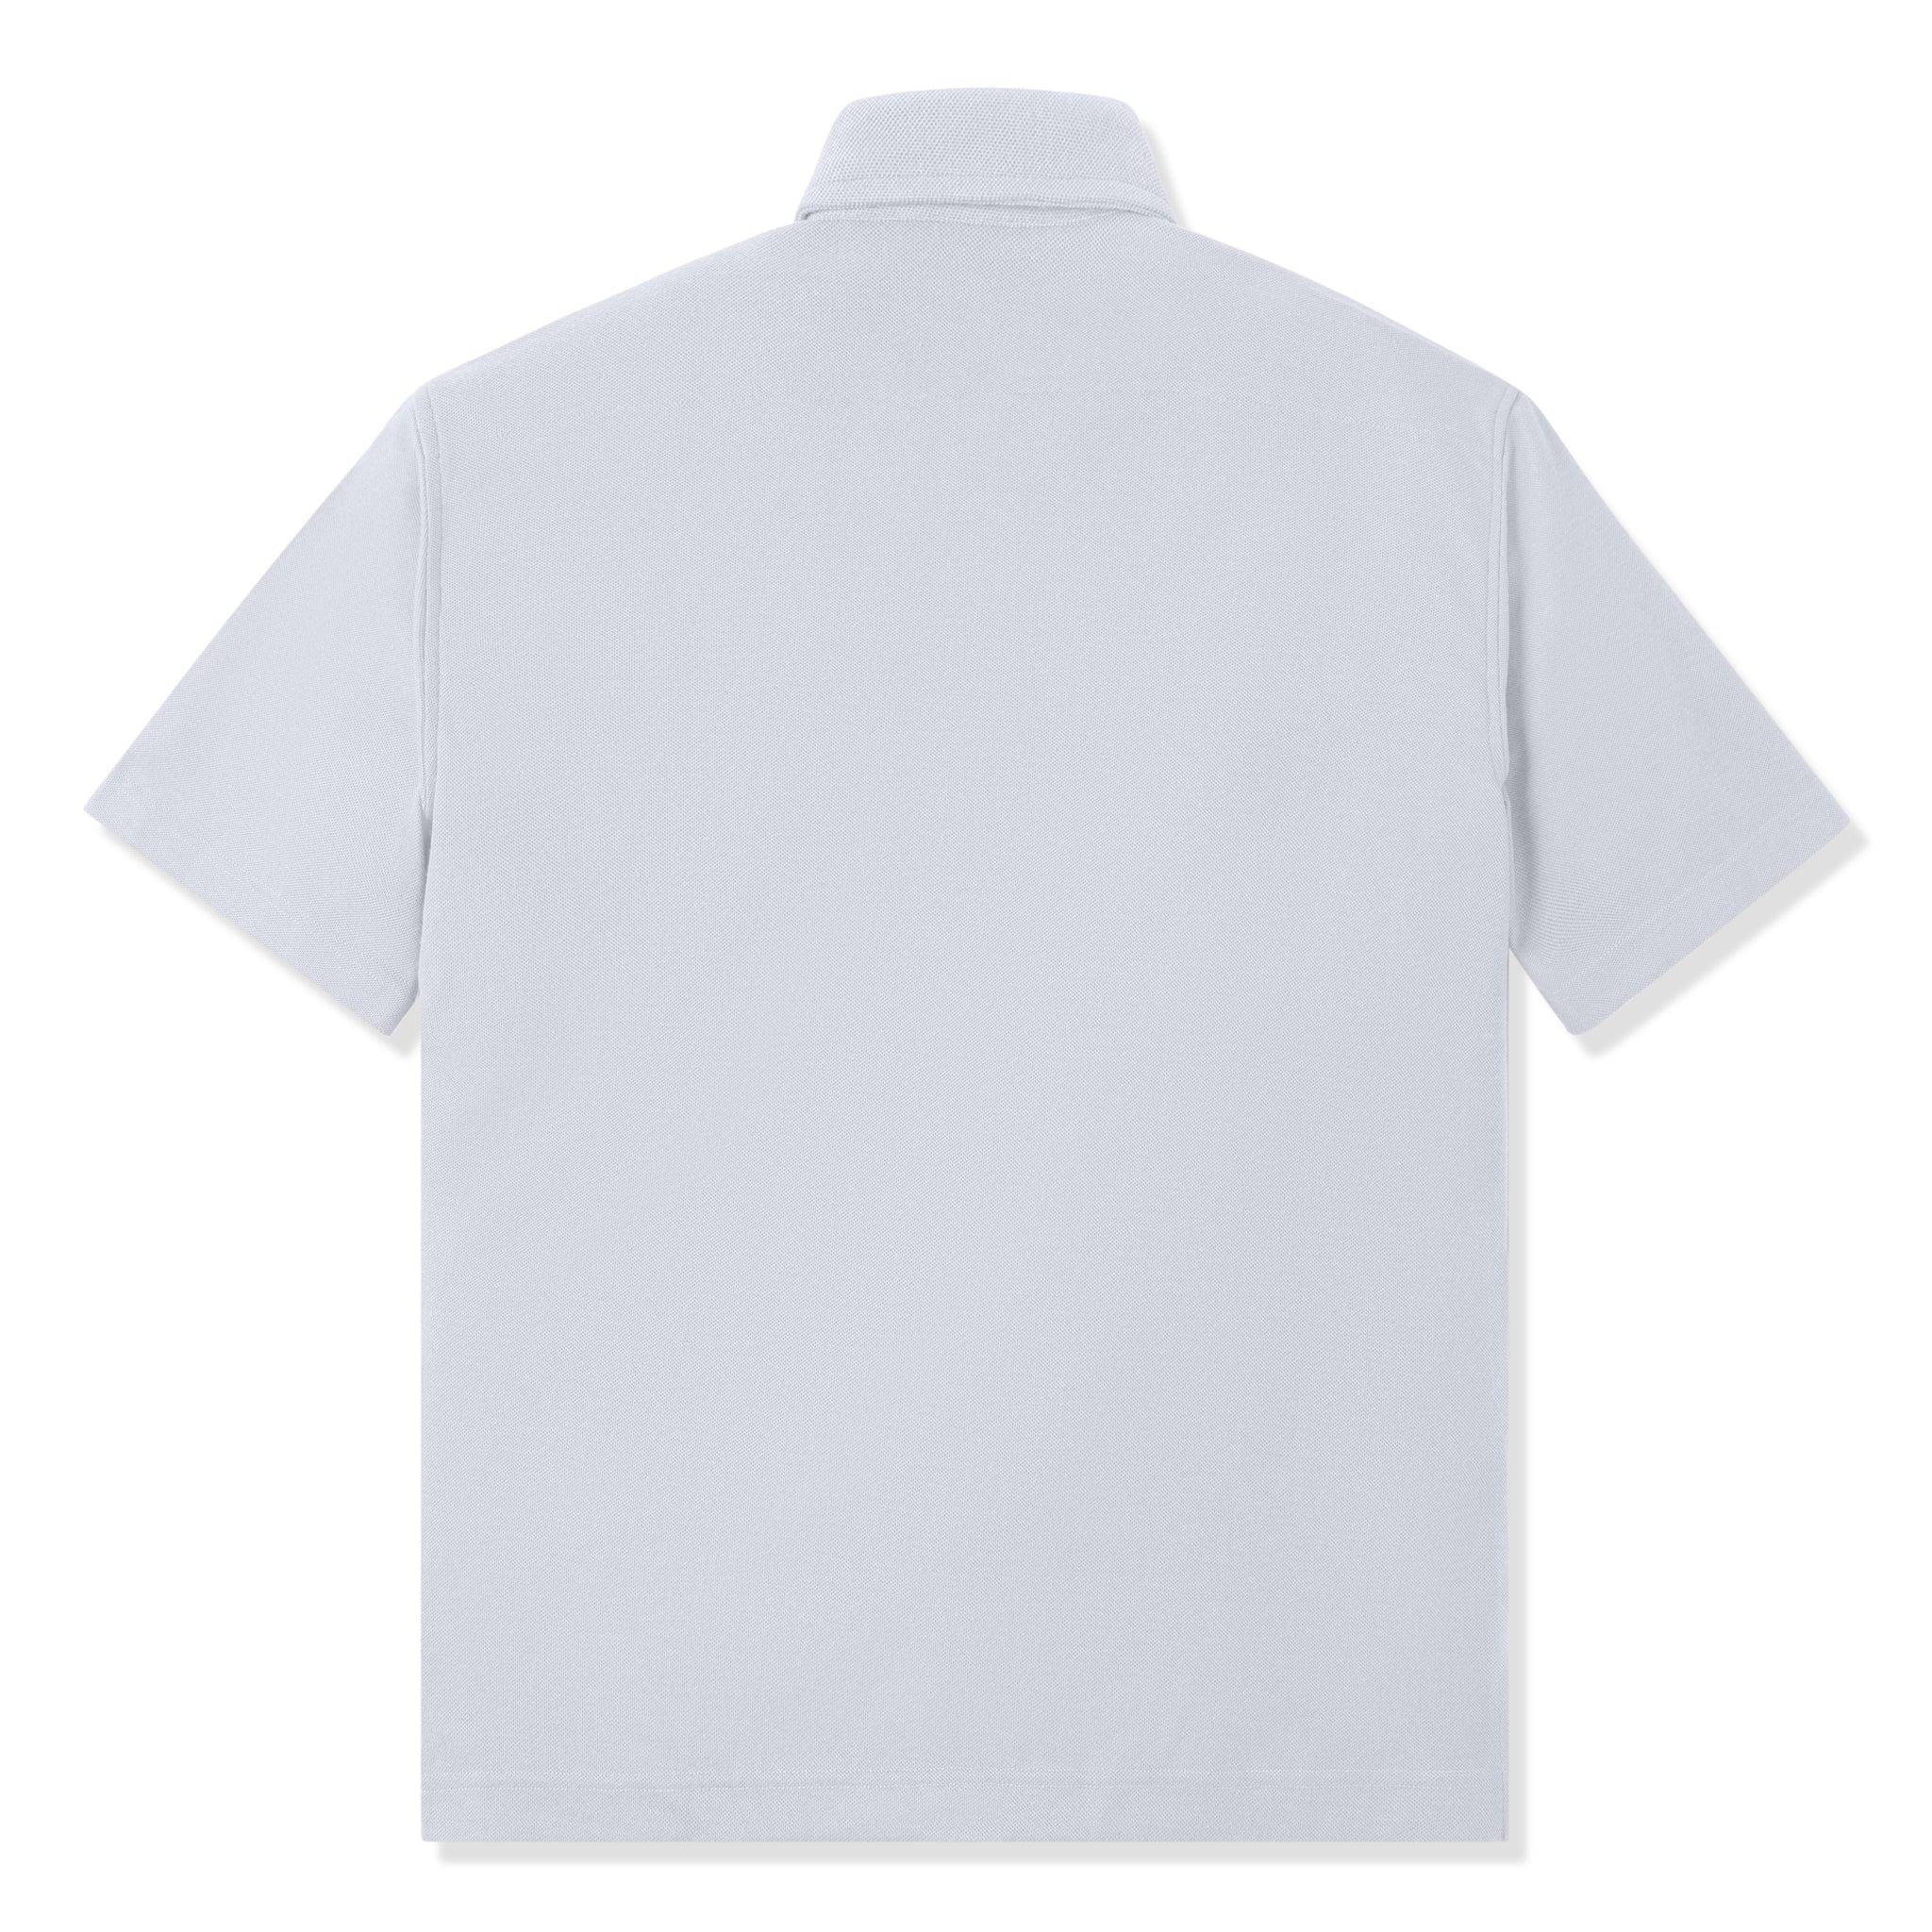 Parisian Polo Short Sleeve - White